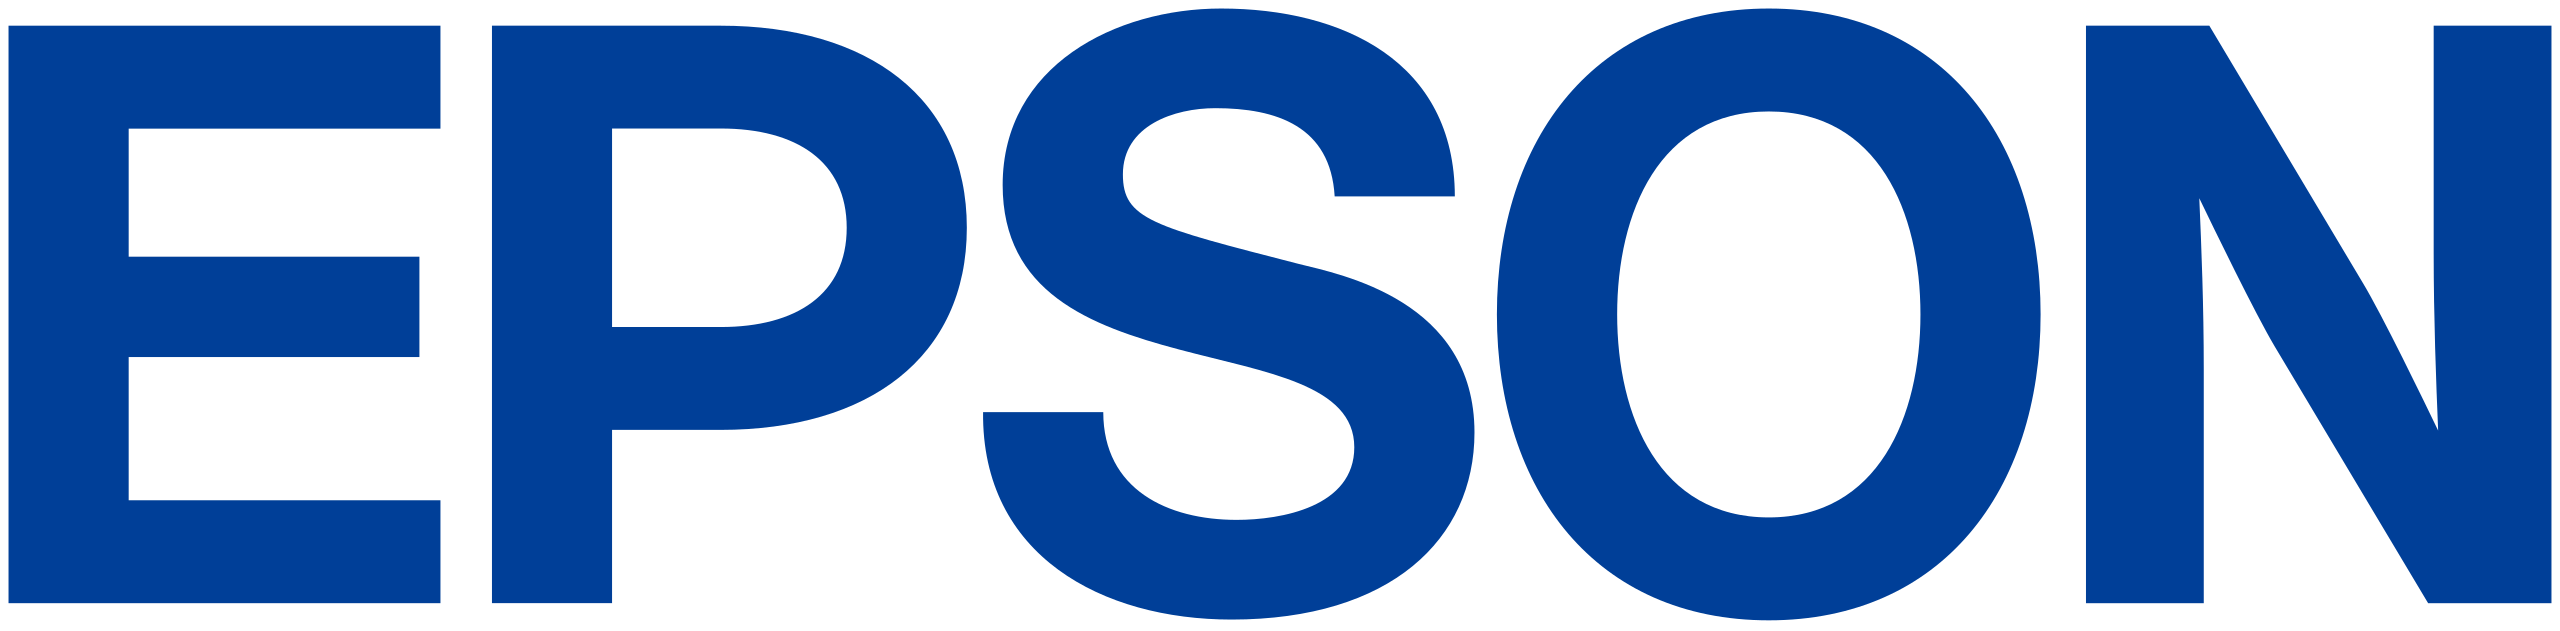 Epson_logo.svg